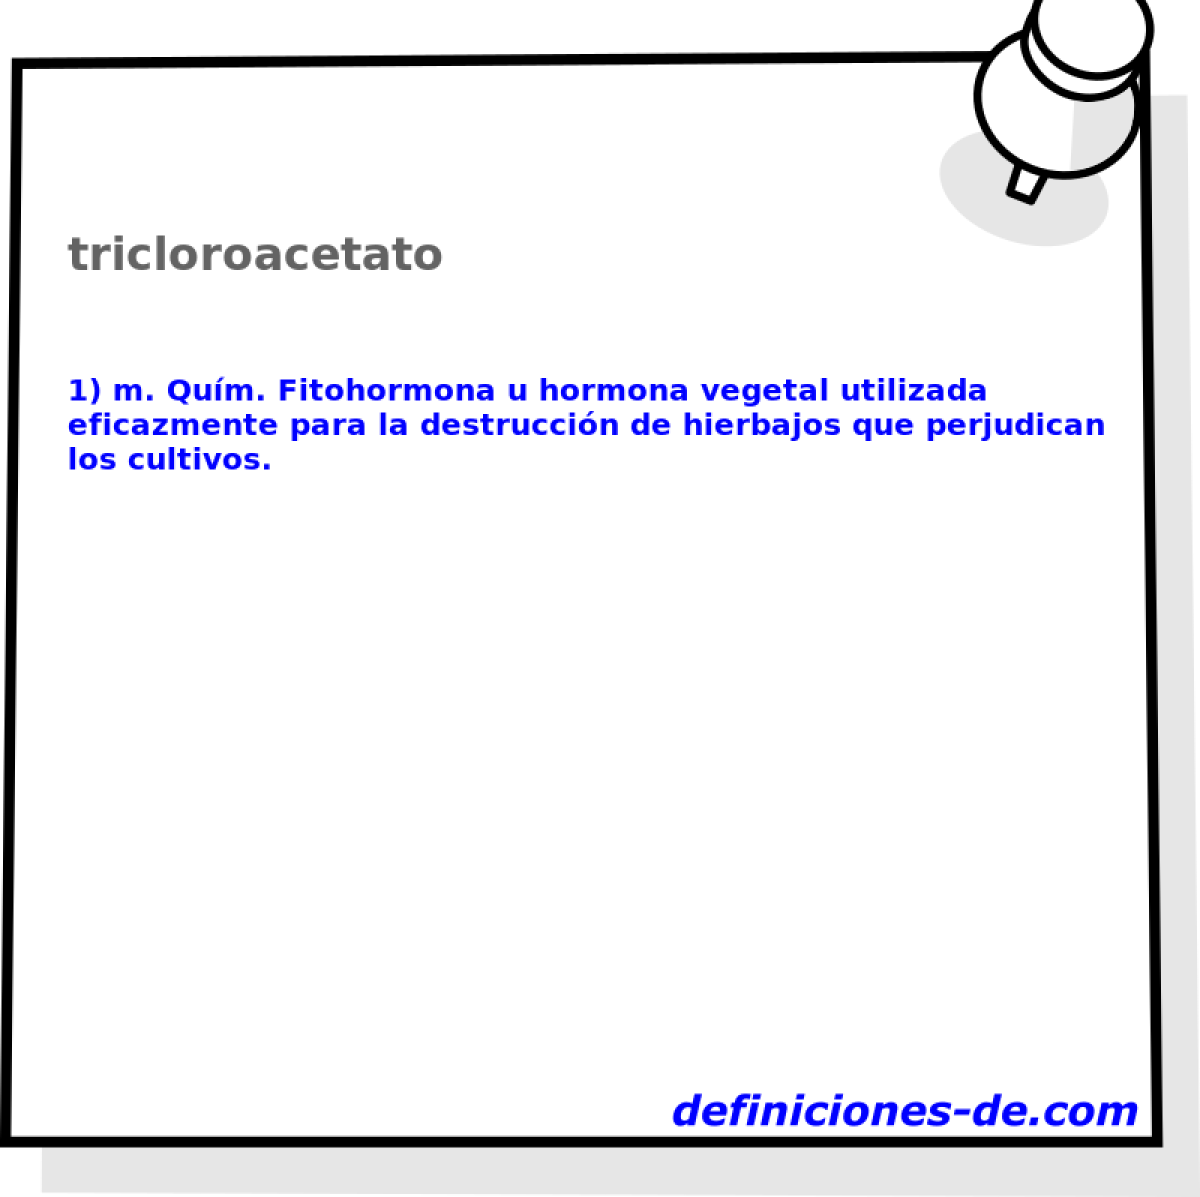 tricloroacetato 